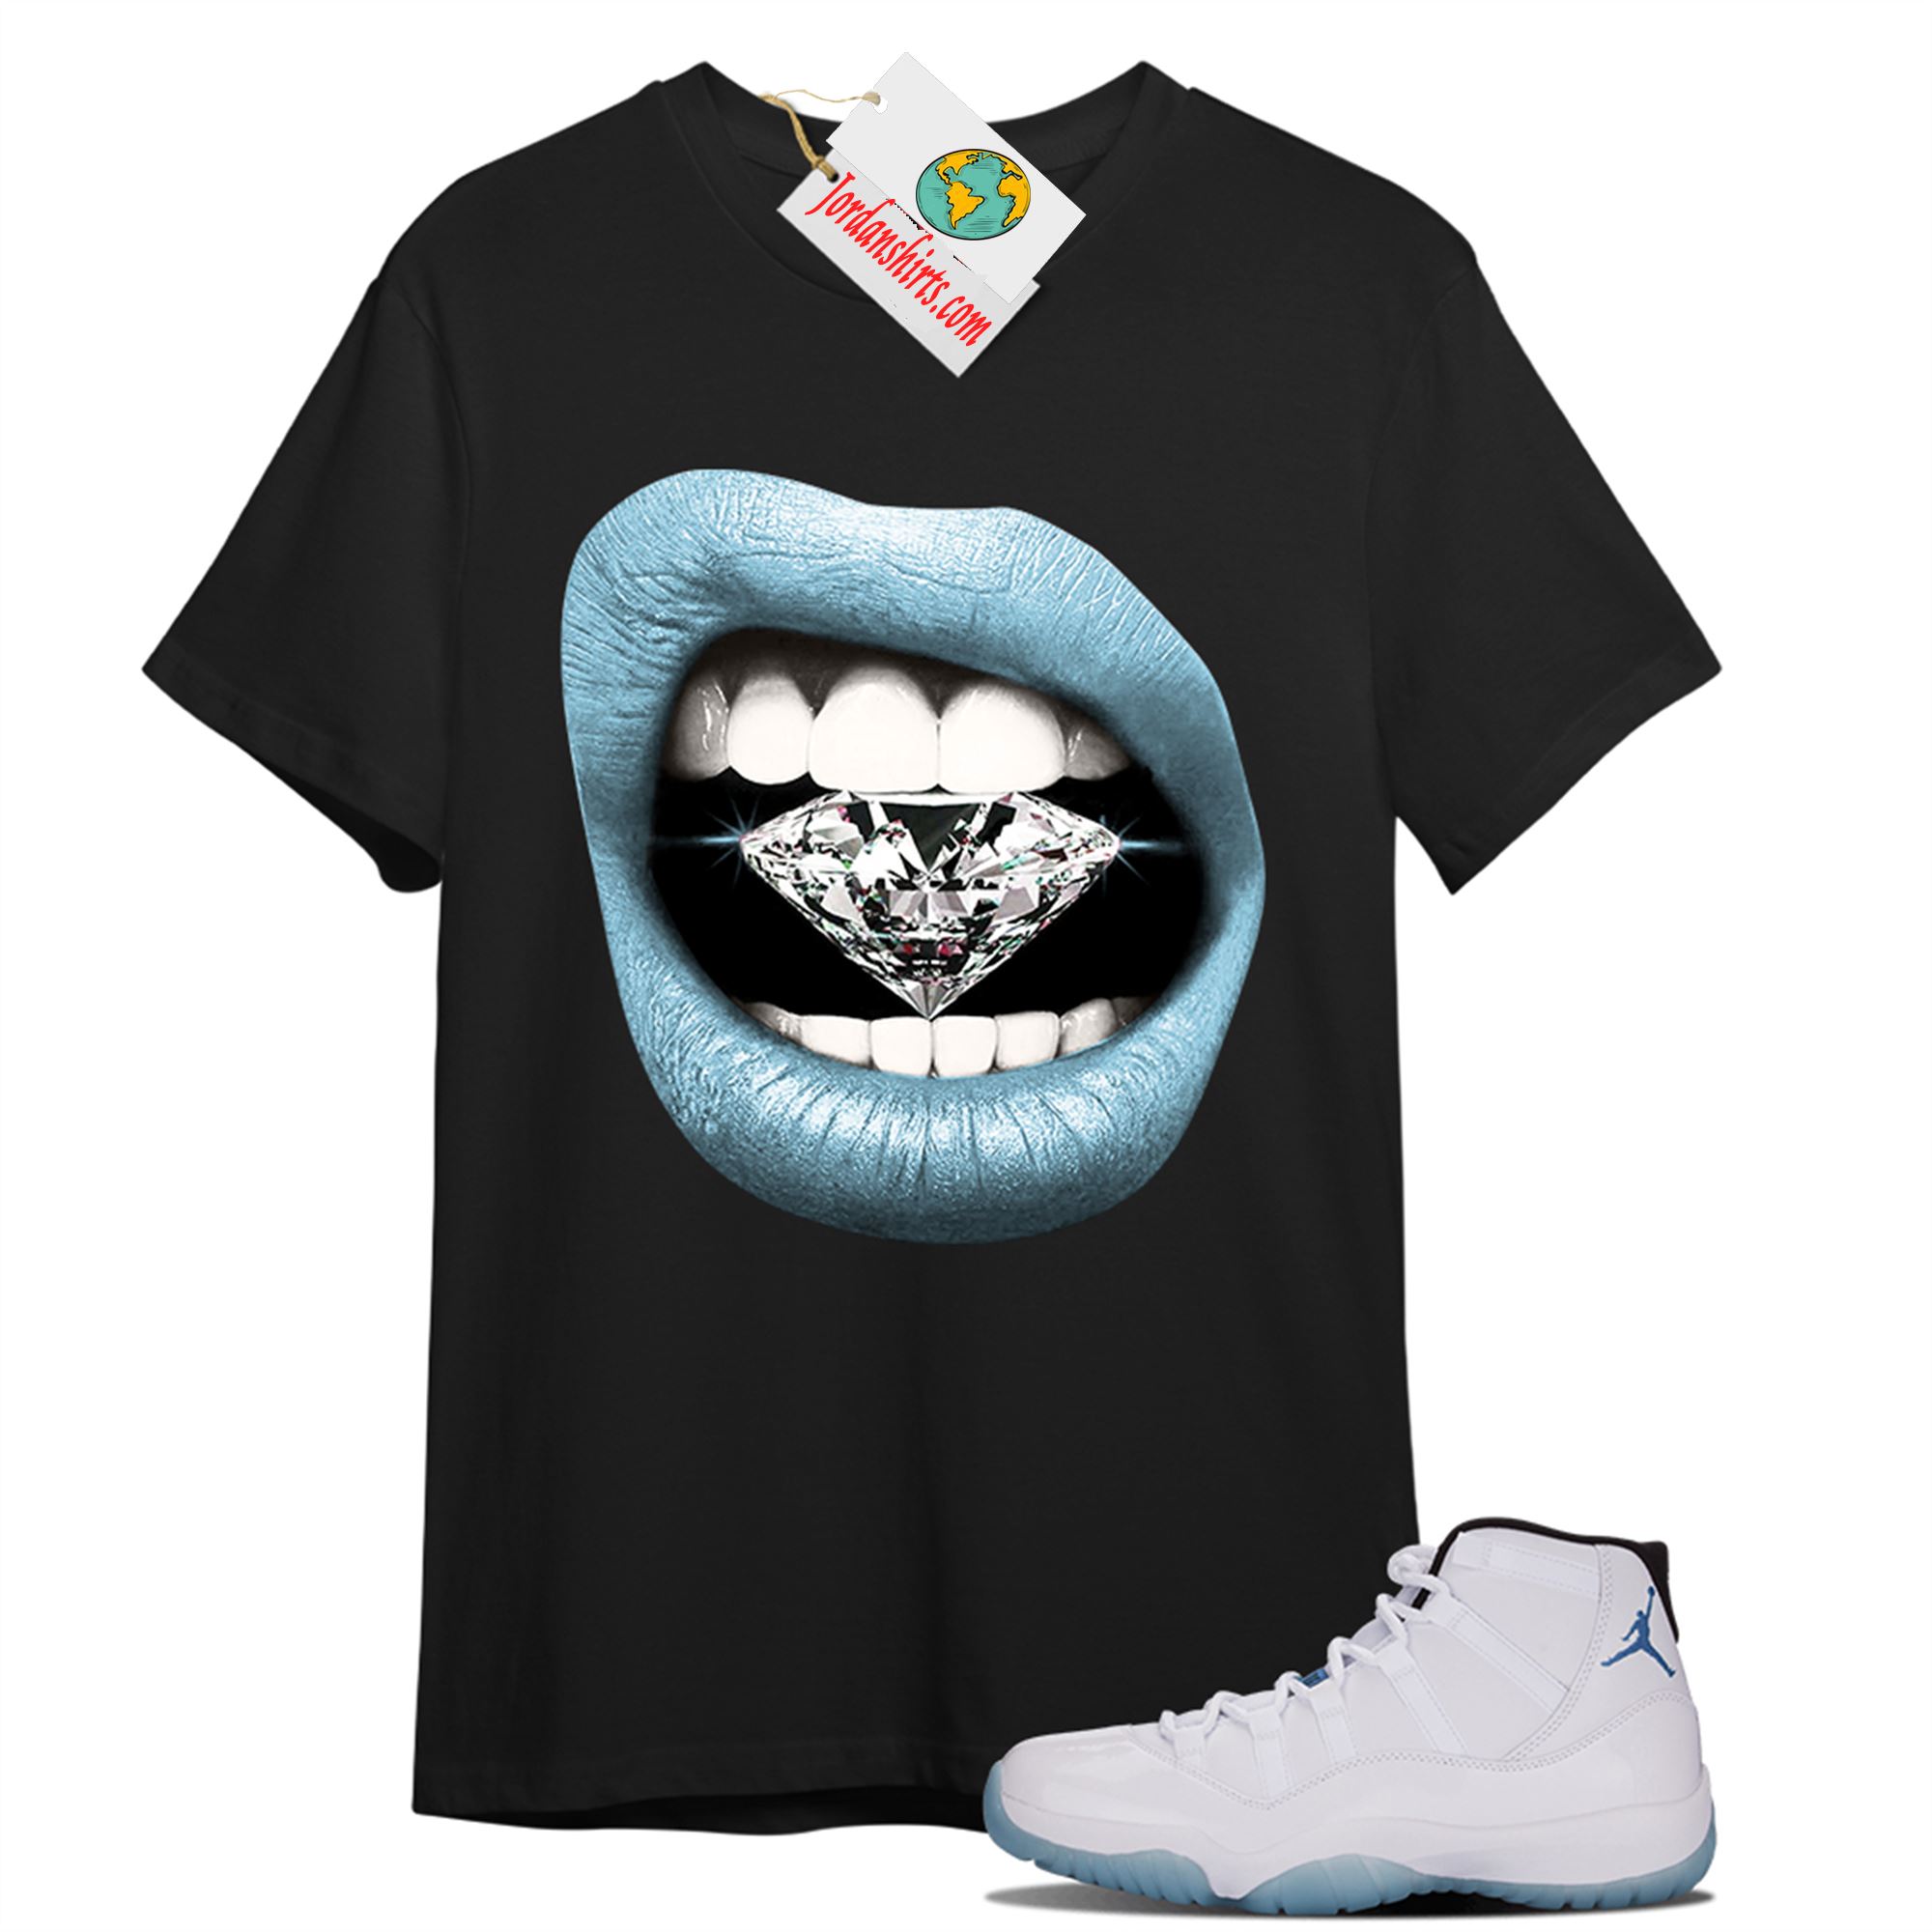 Jordan 11 Shirt, Diamond Lip Black T-shirt Air Jordan 11 Legend Blue 11s Size Up To 5xl